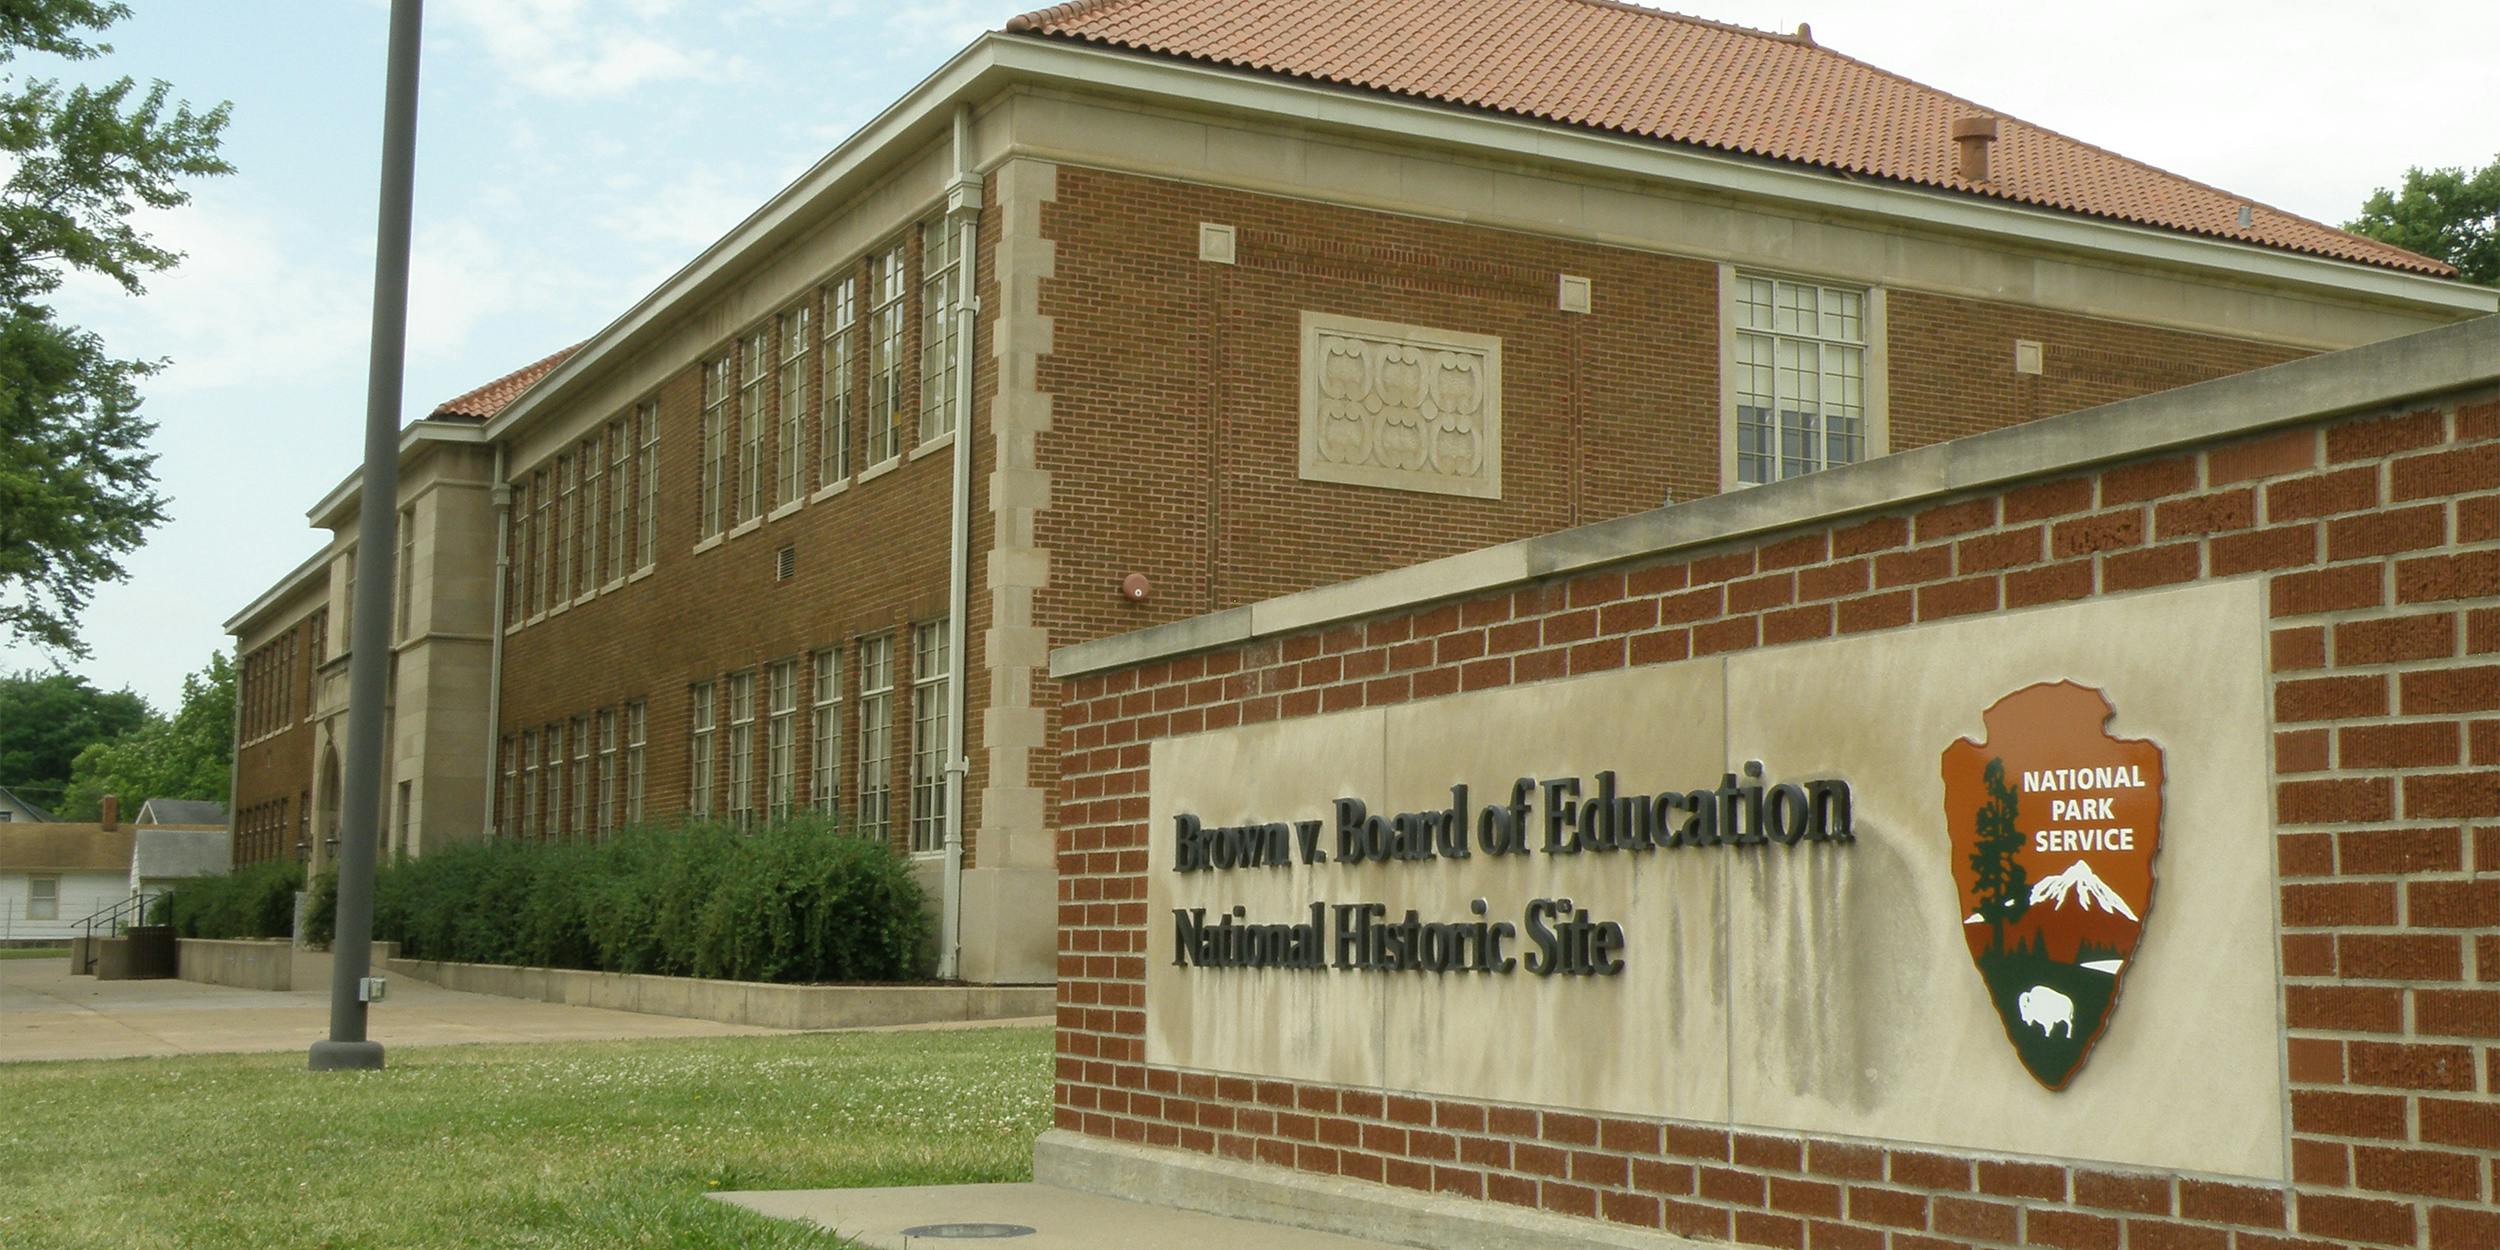 Brown v. Board of Education National Historic Site, Topeka Kan.